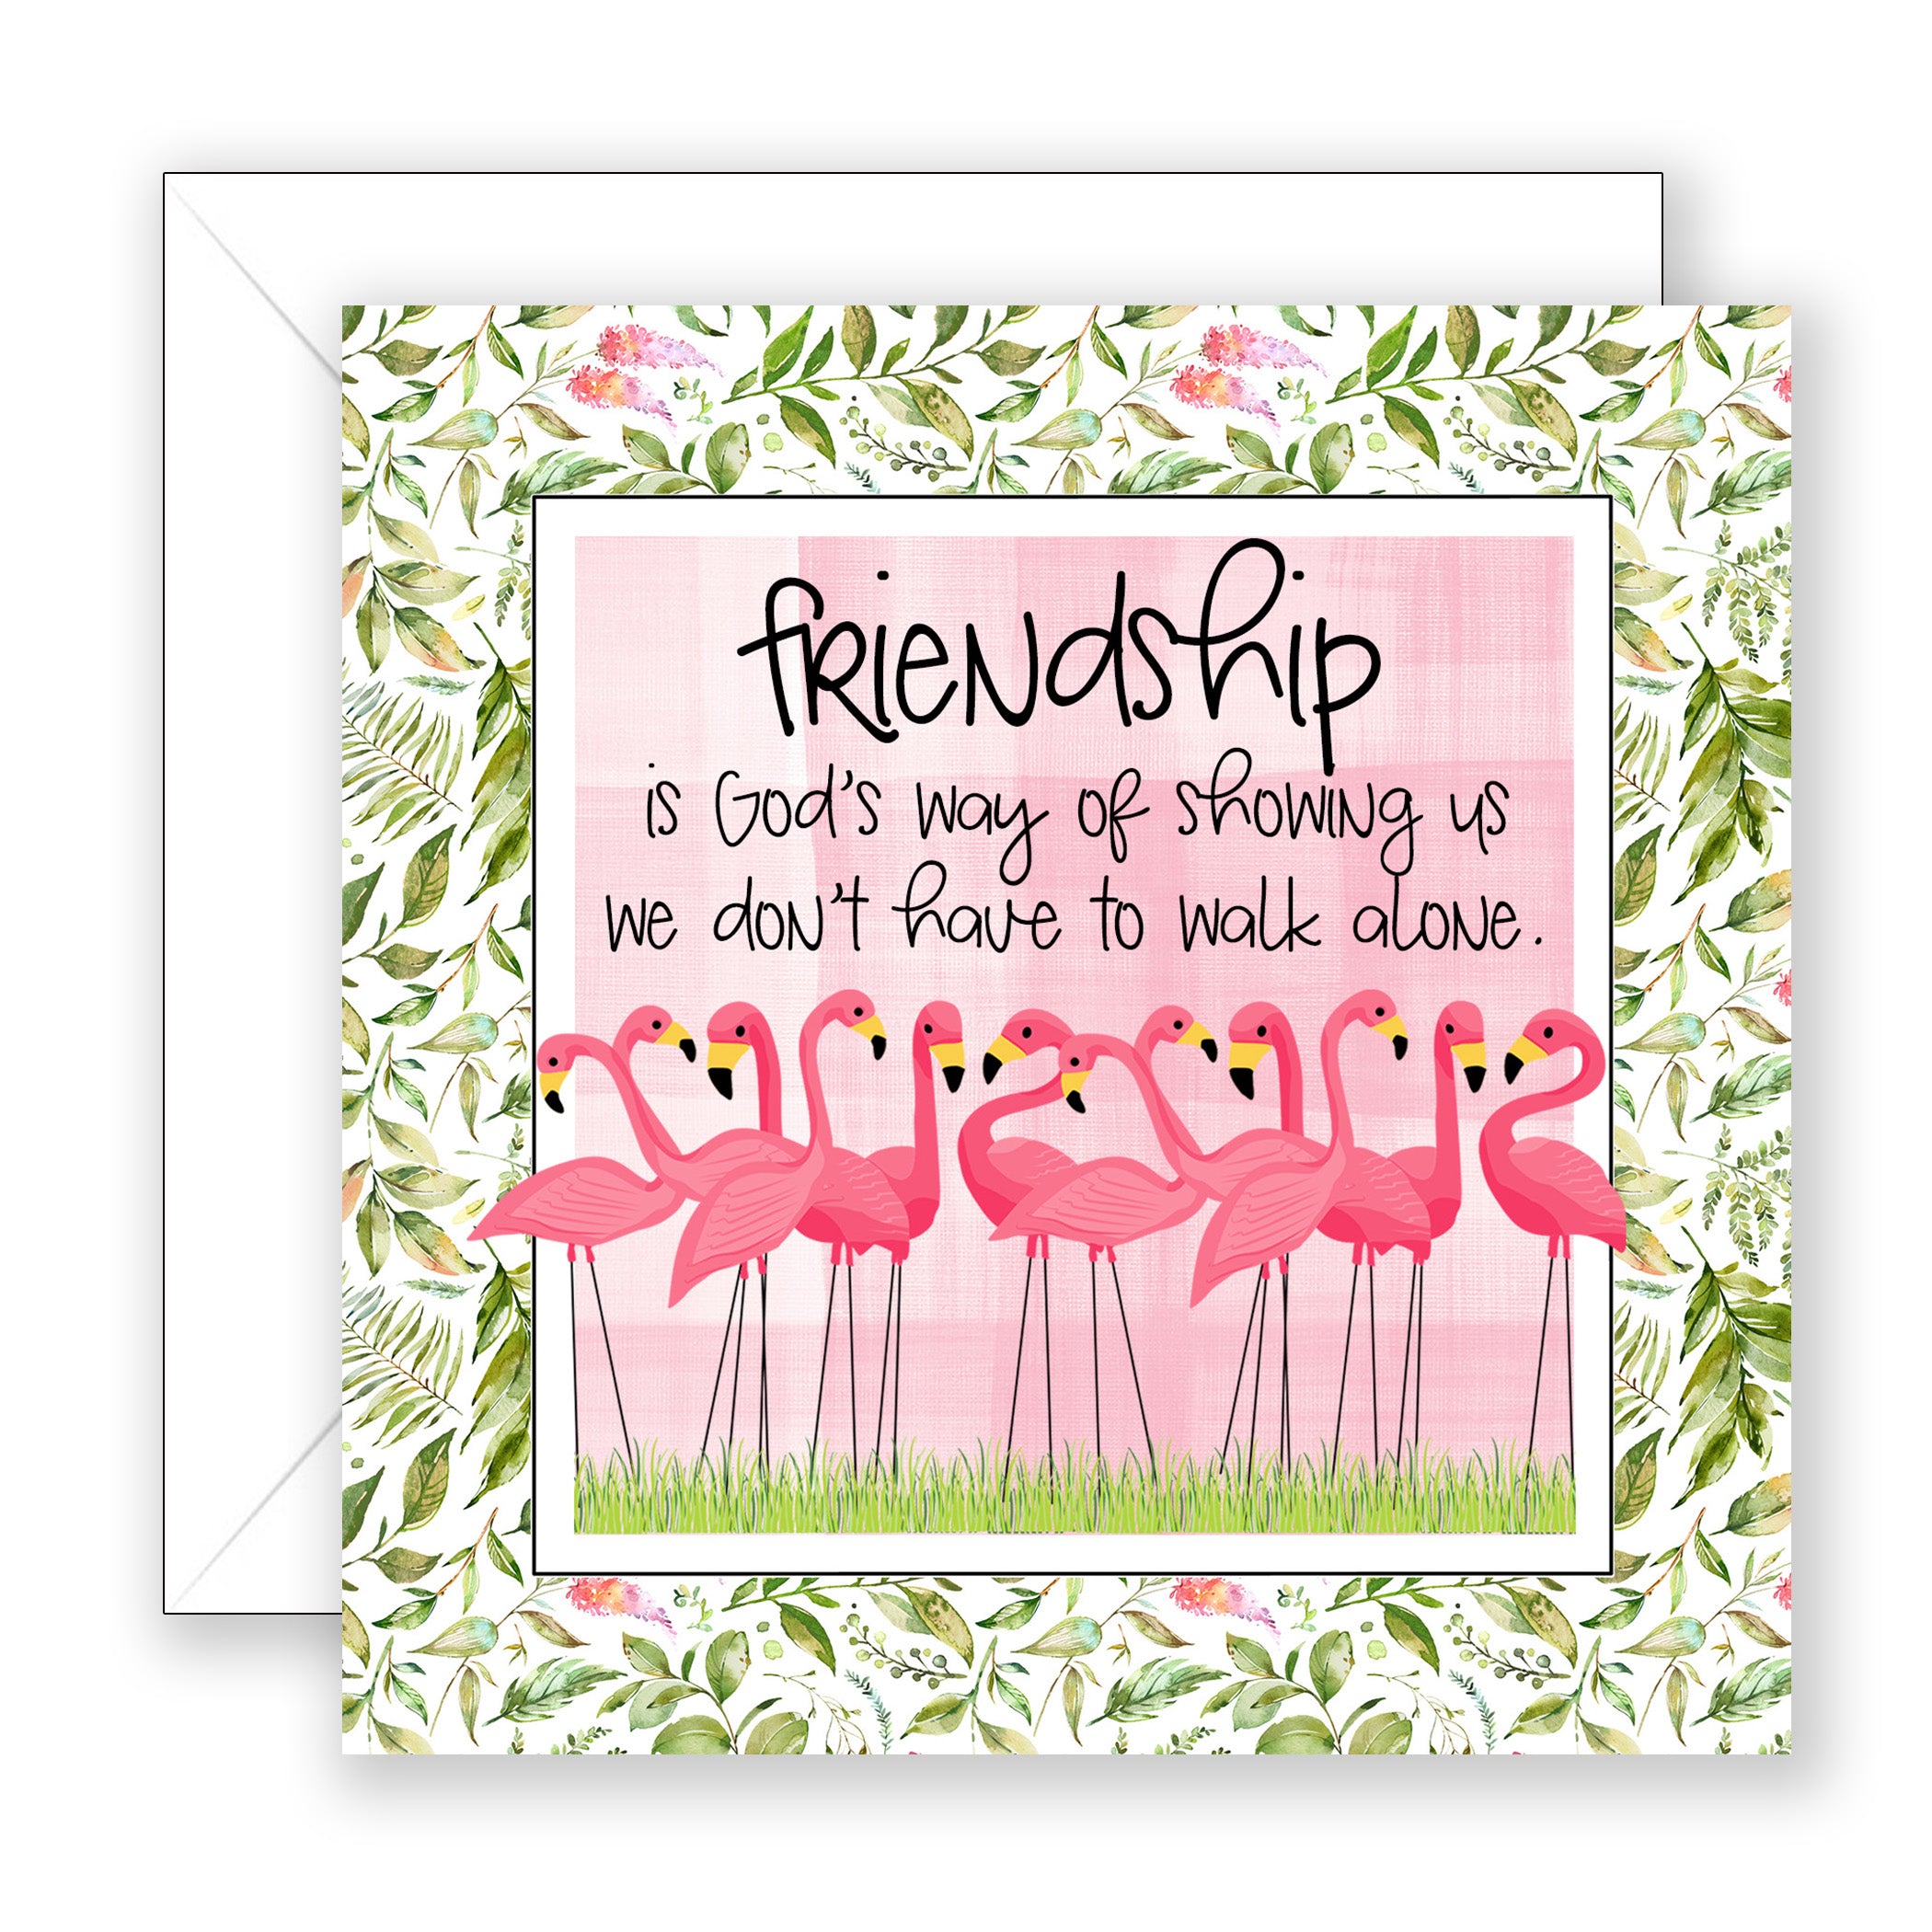 Friendship is God's Way - Encouragement Card